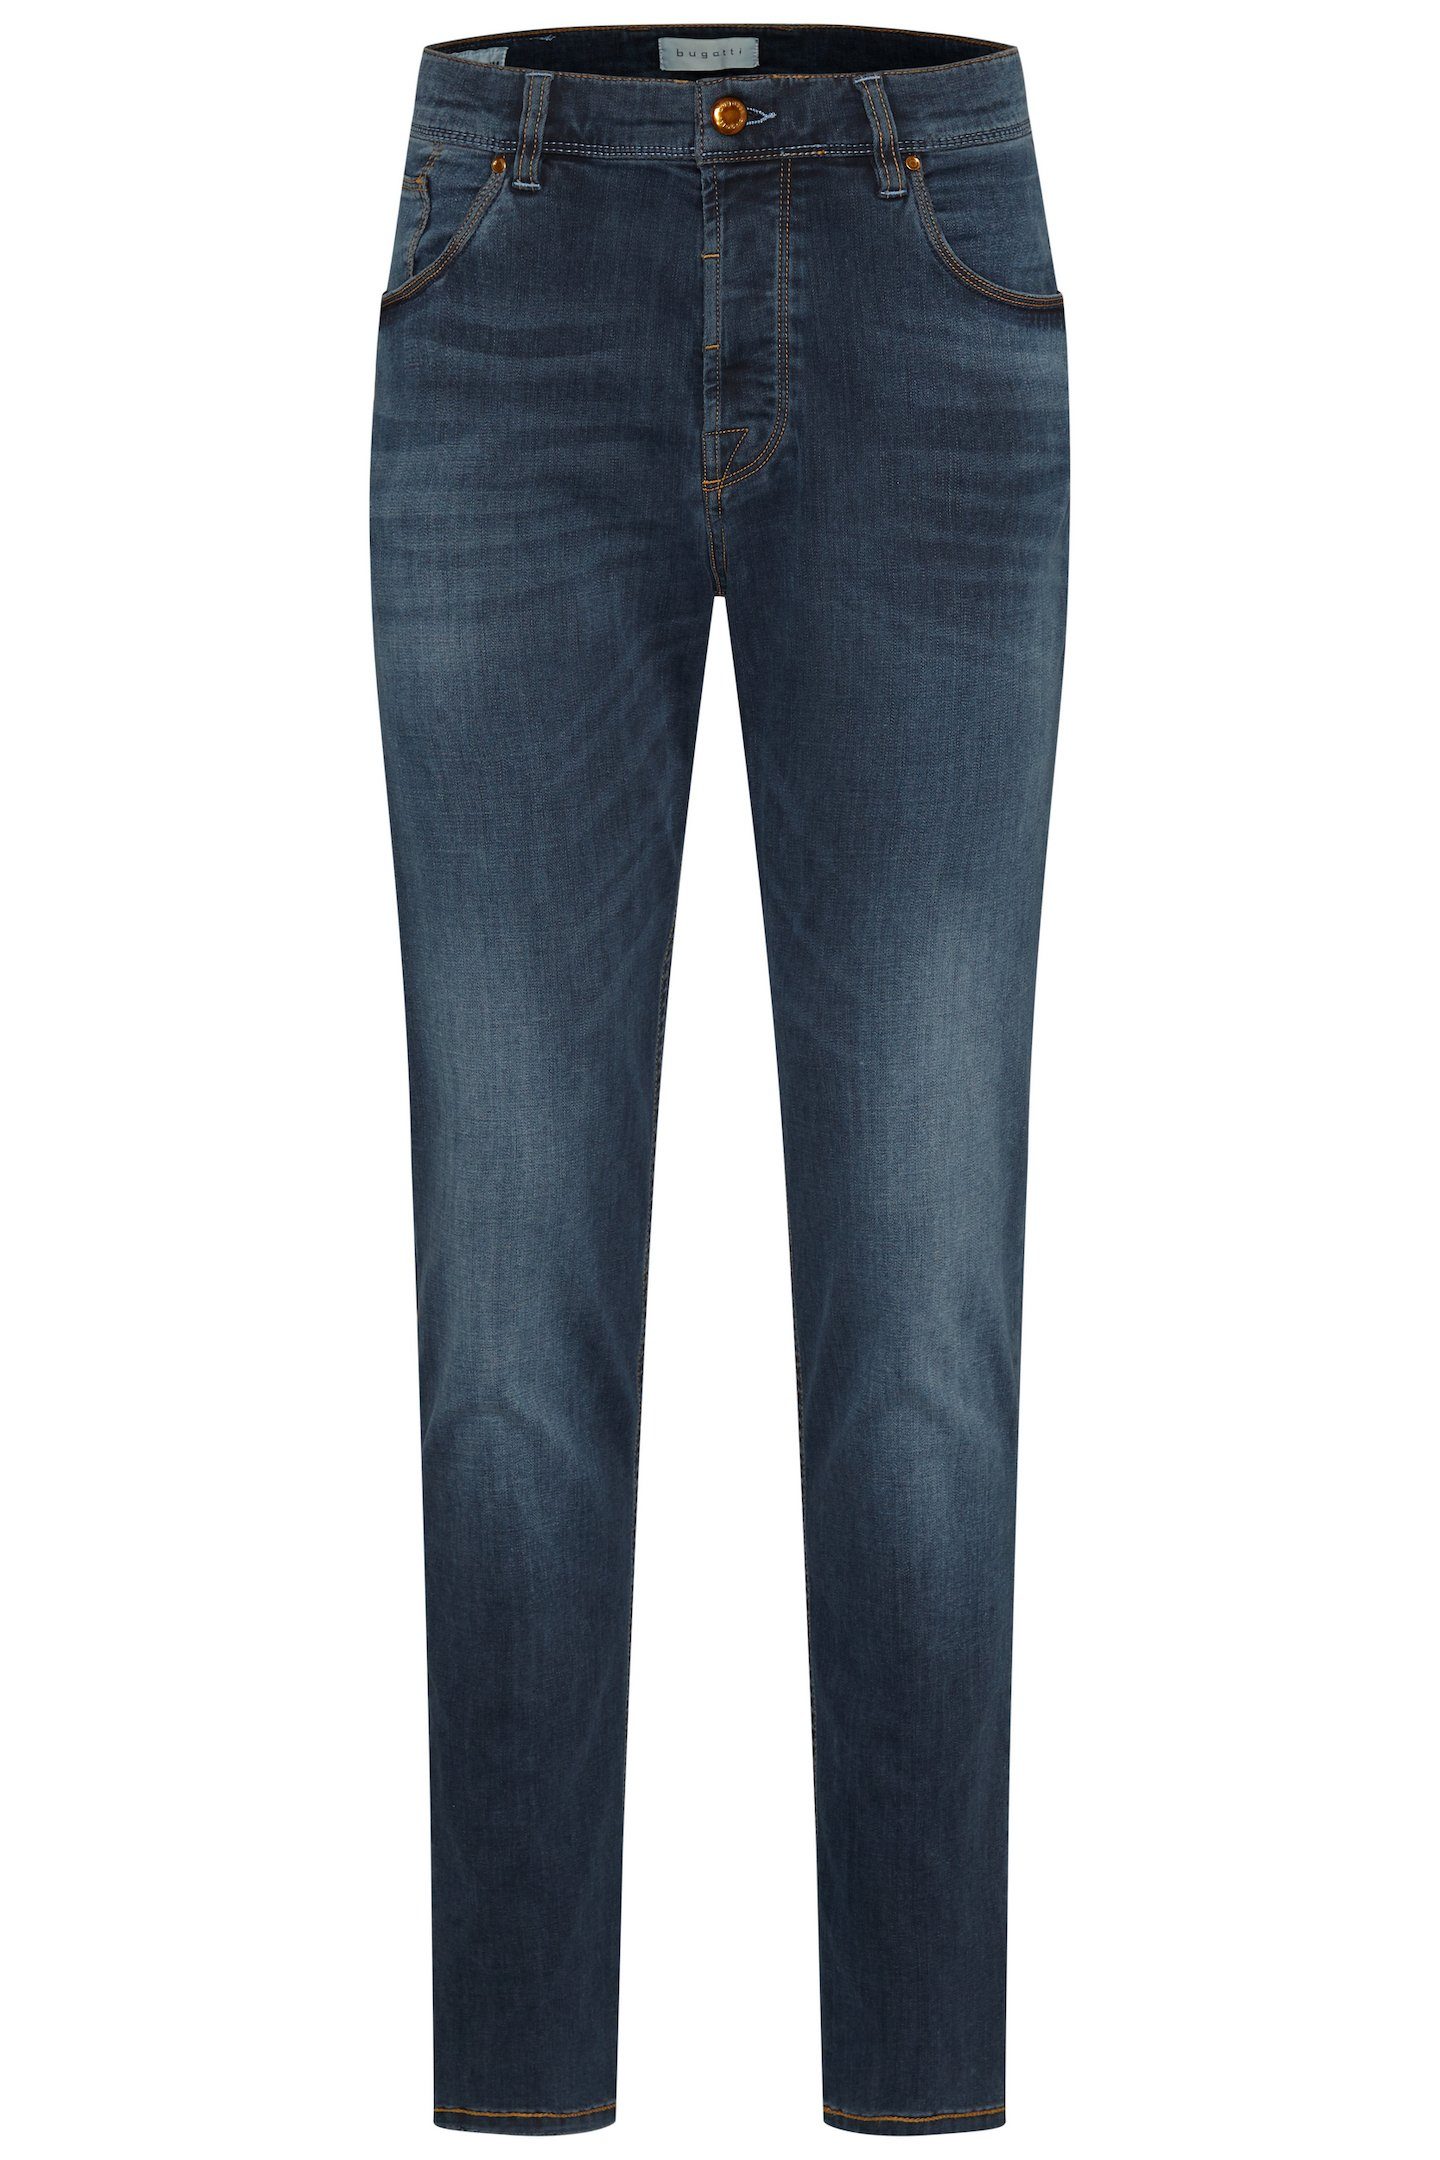 Respect 5-Pocket-Jeans Kollektion dunkelblau Nature aus bugatti der